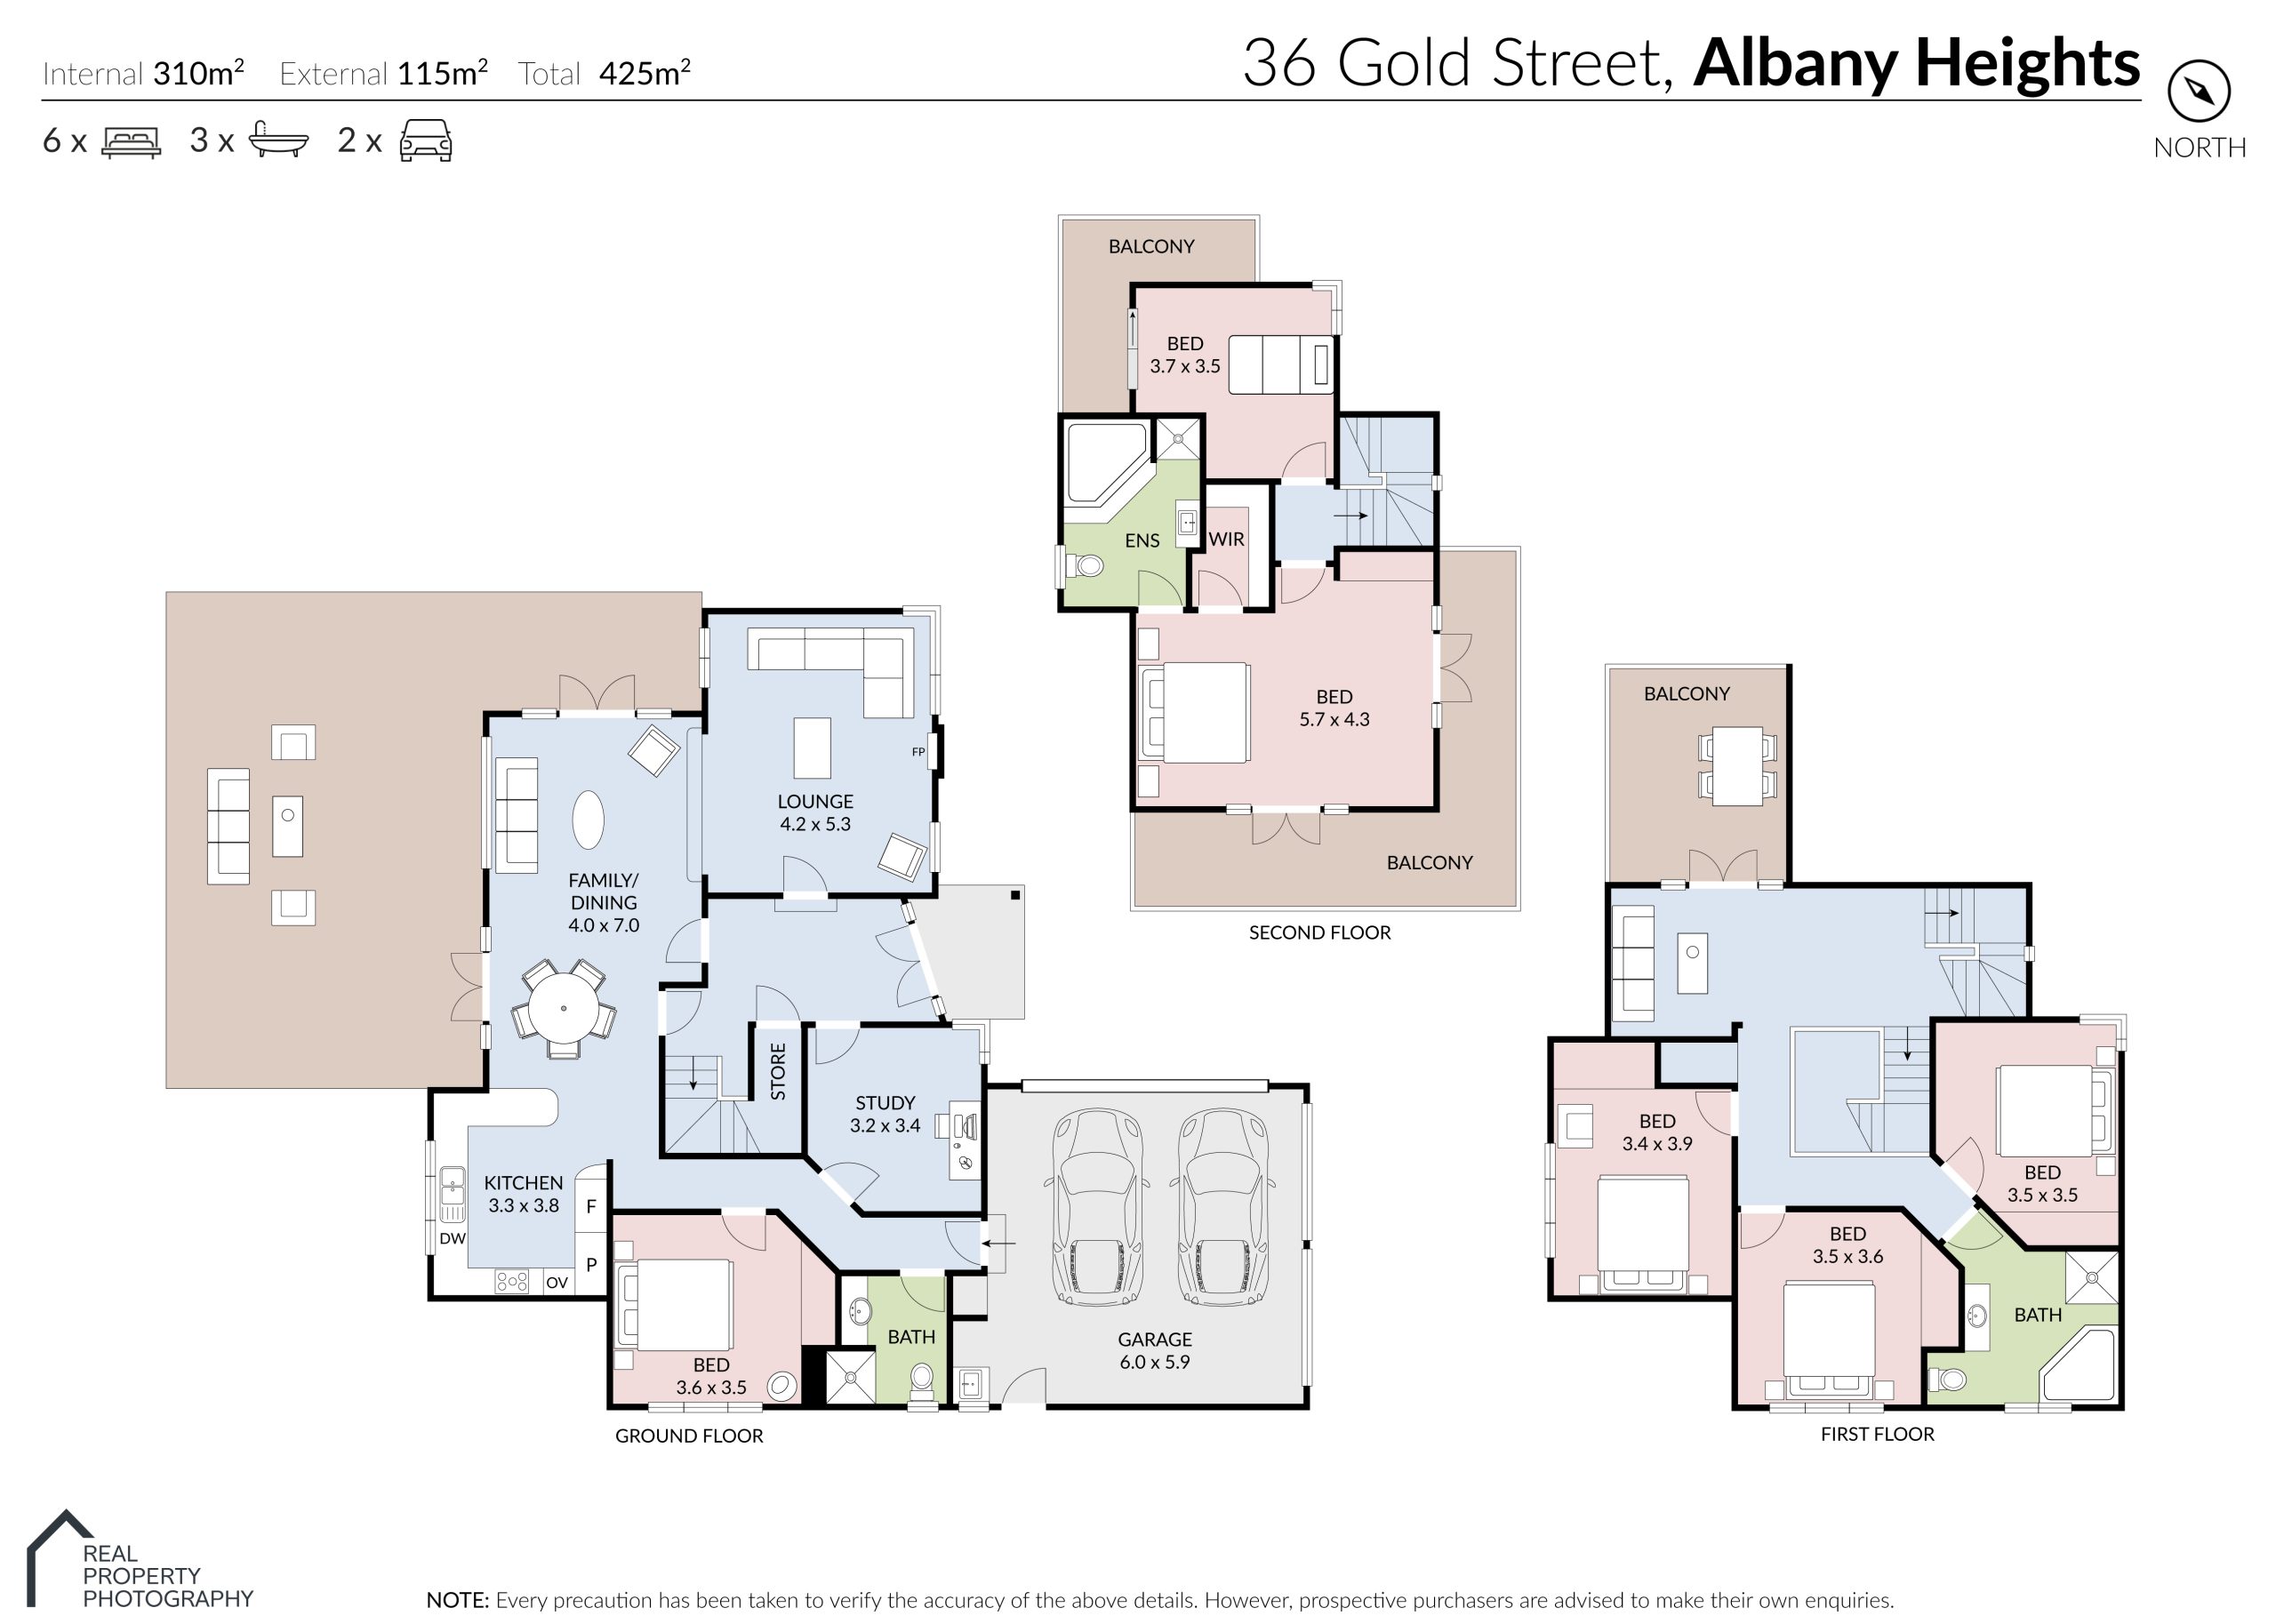 36 Gold Street - Floor plans